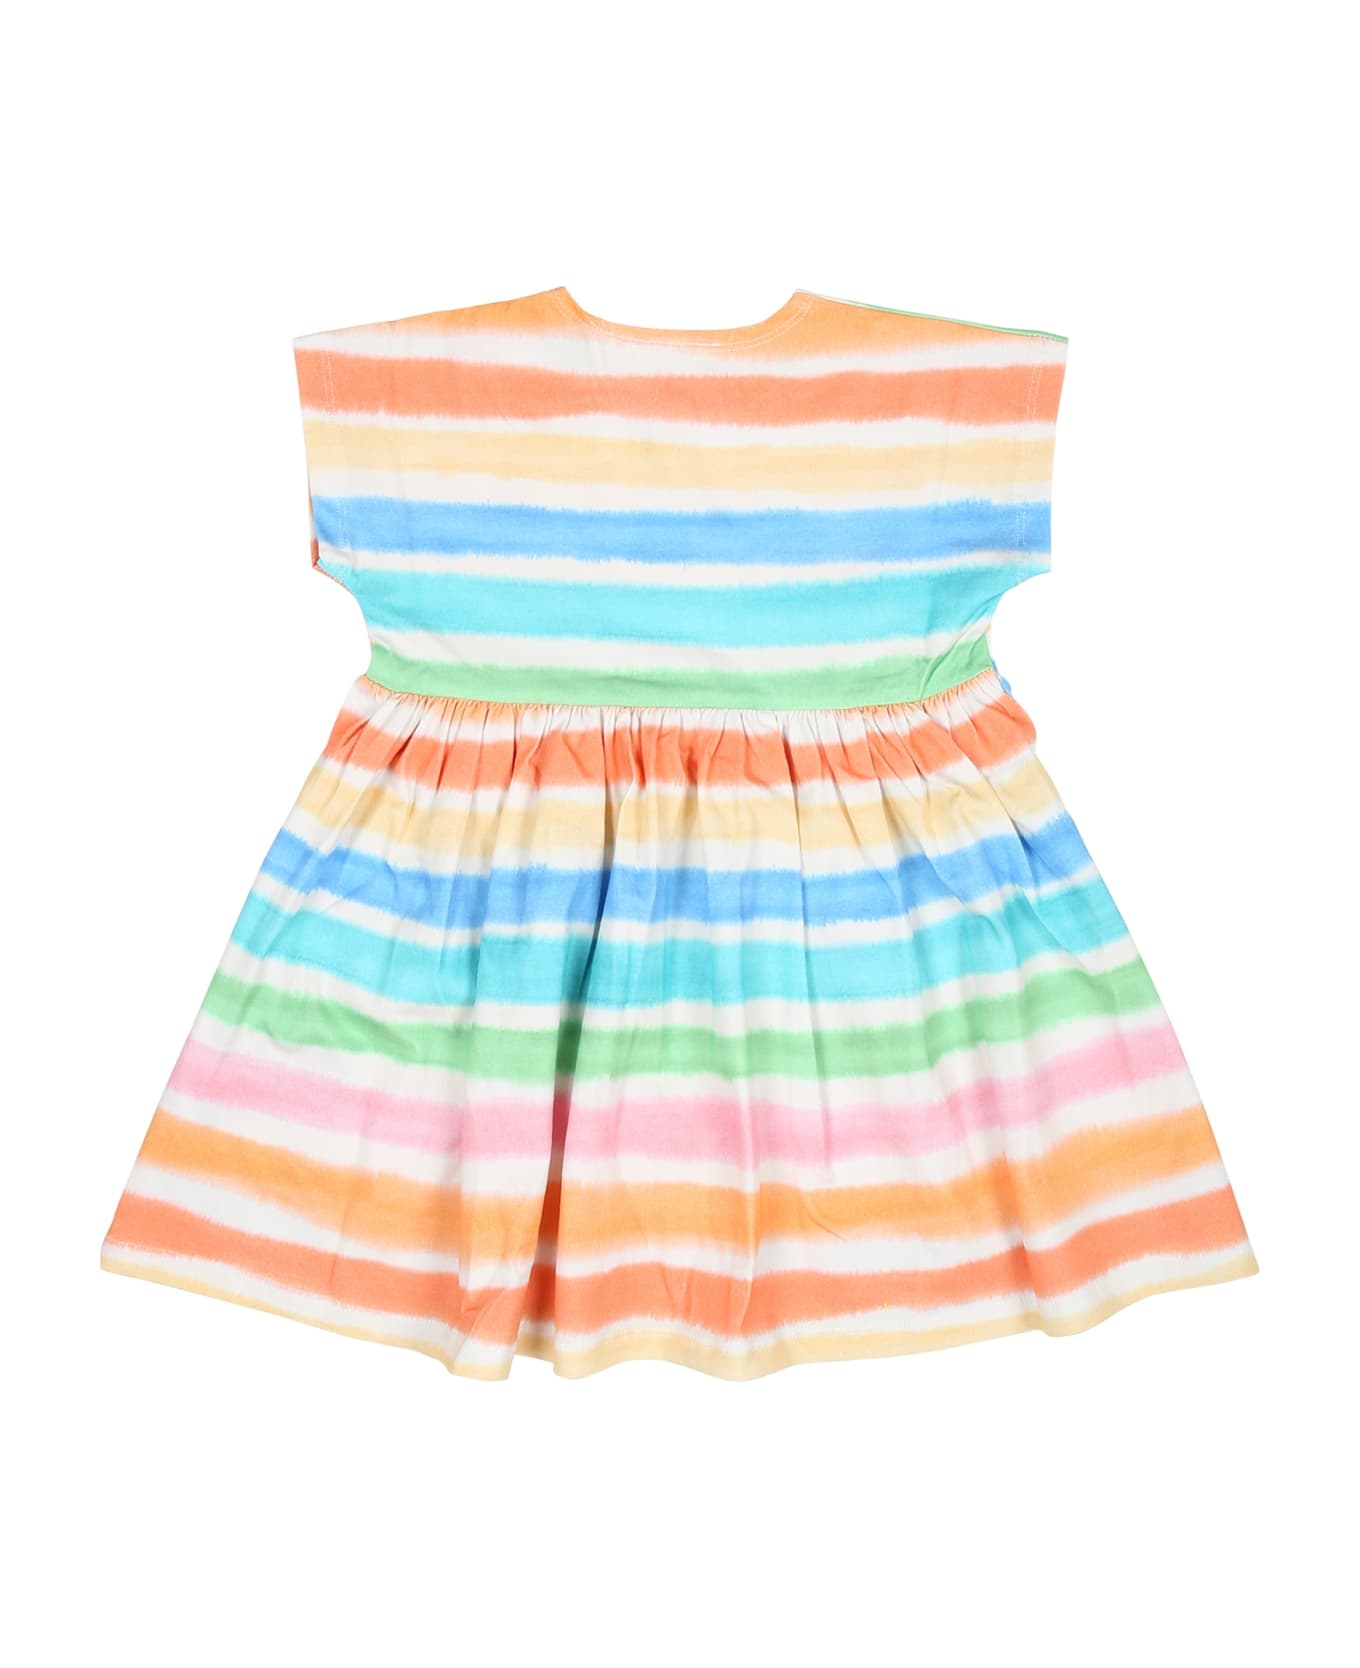 Molo Multicolor Casual Dress For Baby Girl - Multicolor